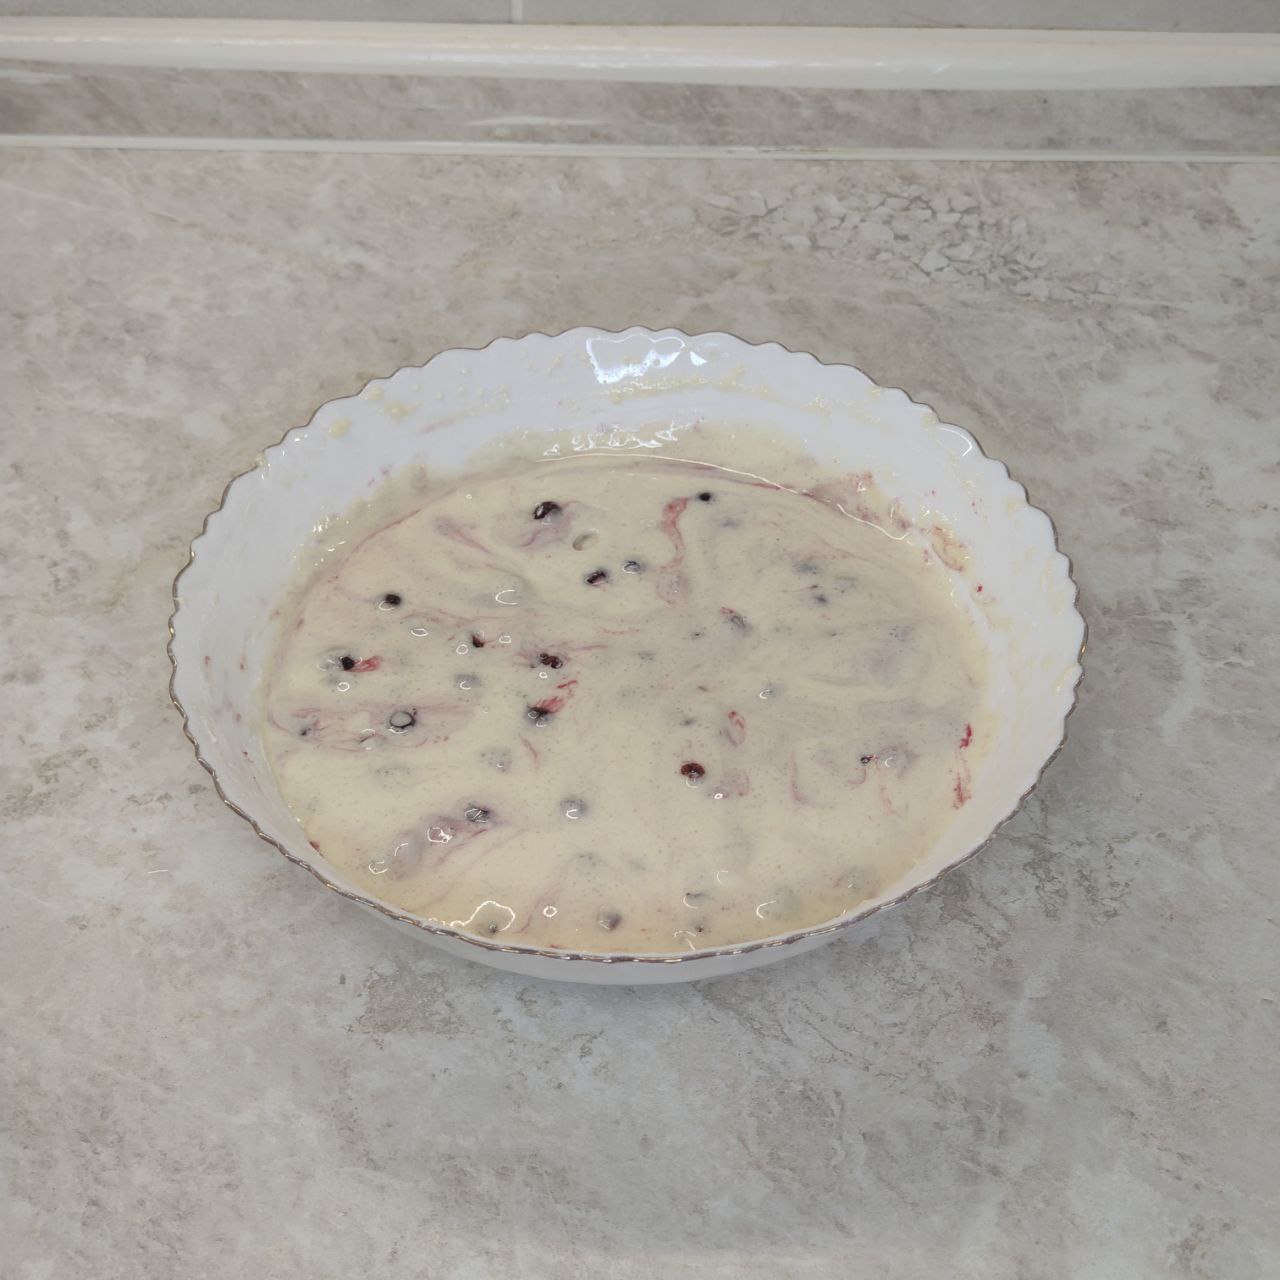 бисквитный брусничный пирог – 5 шаг